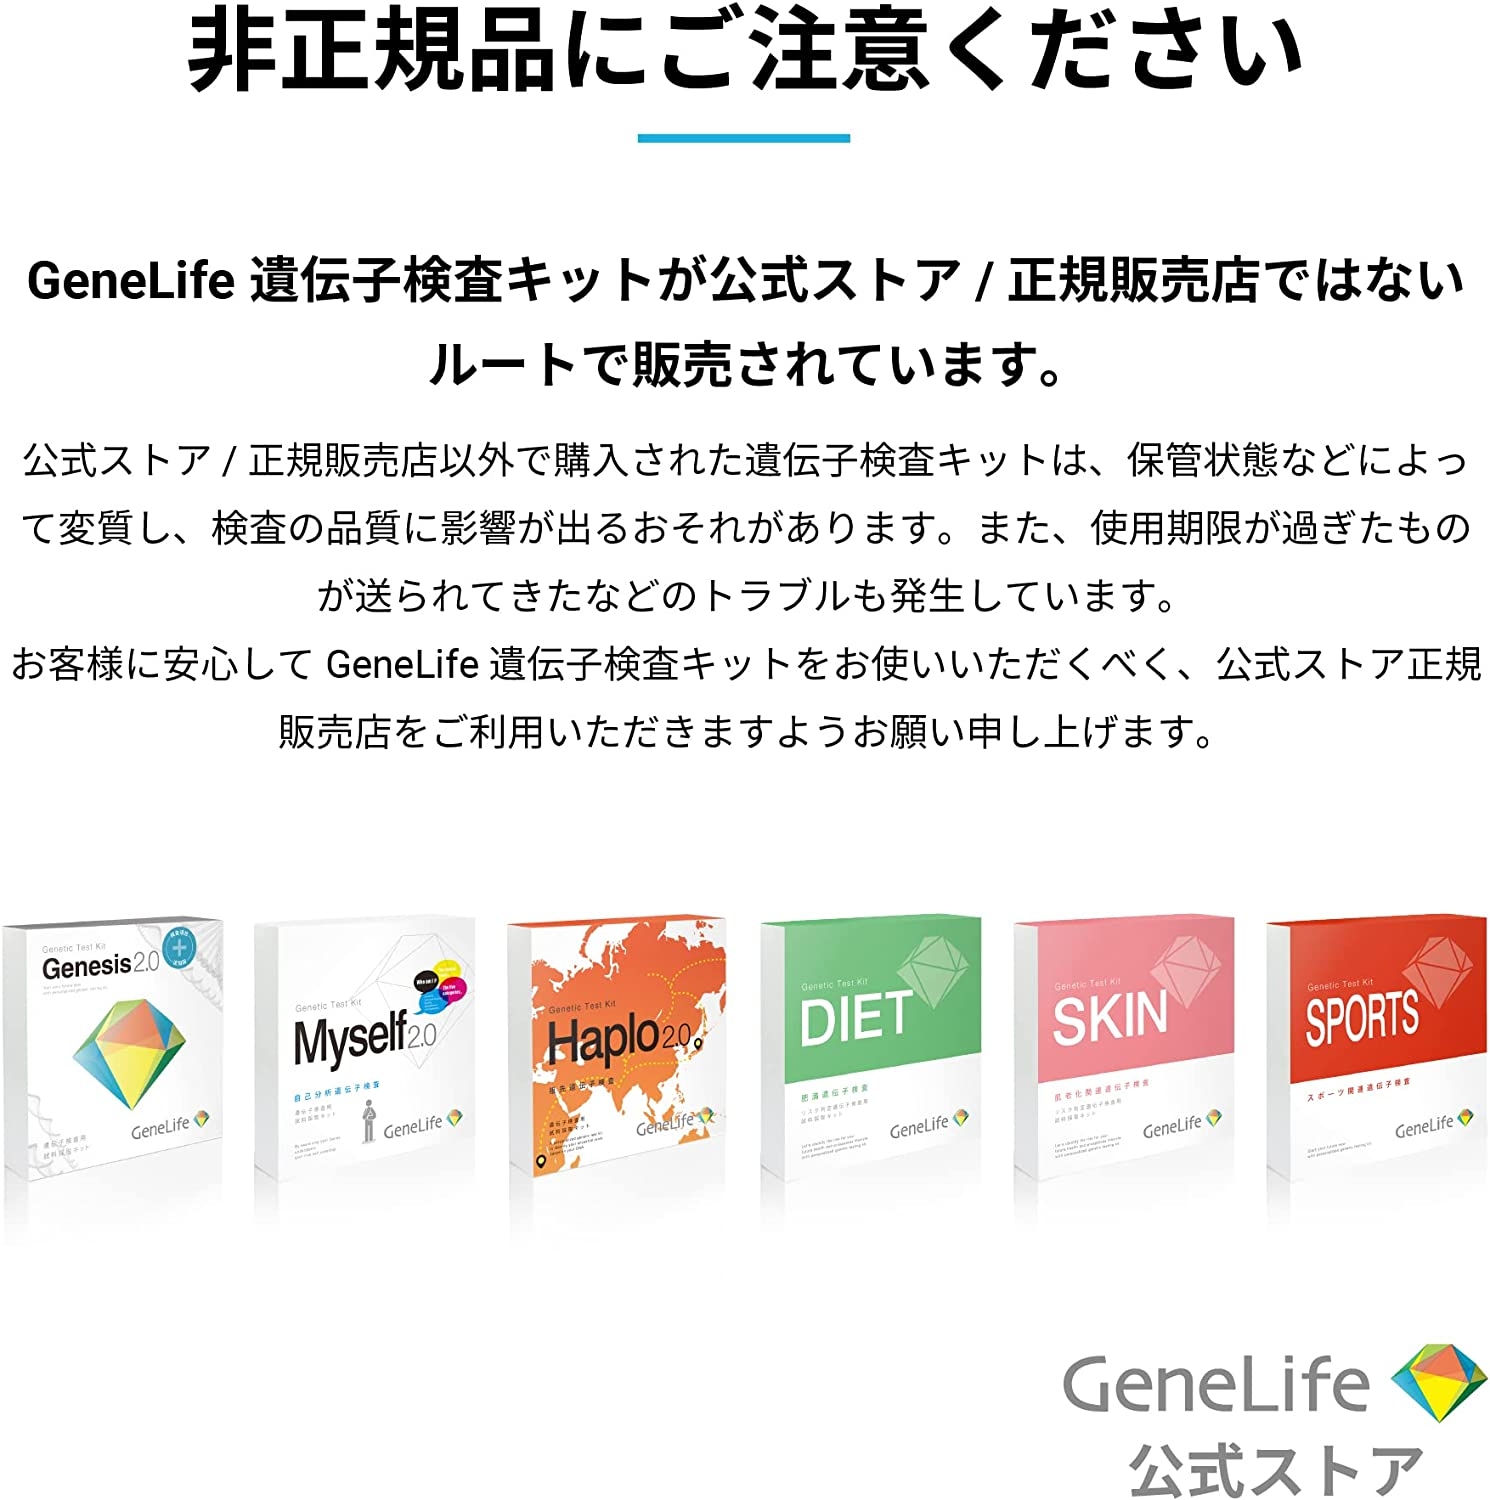 GeneLife(ジーンライフ) Genesis2.0 Plusの商品画像9 